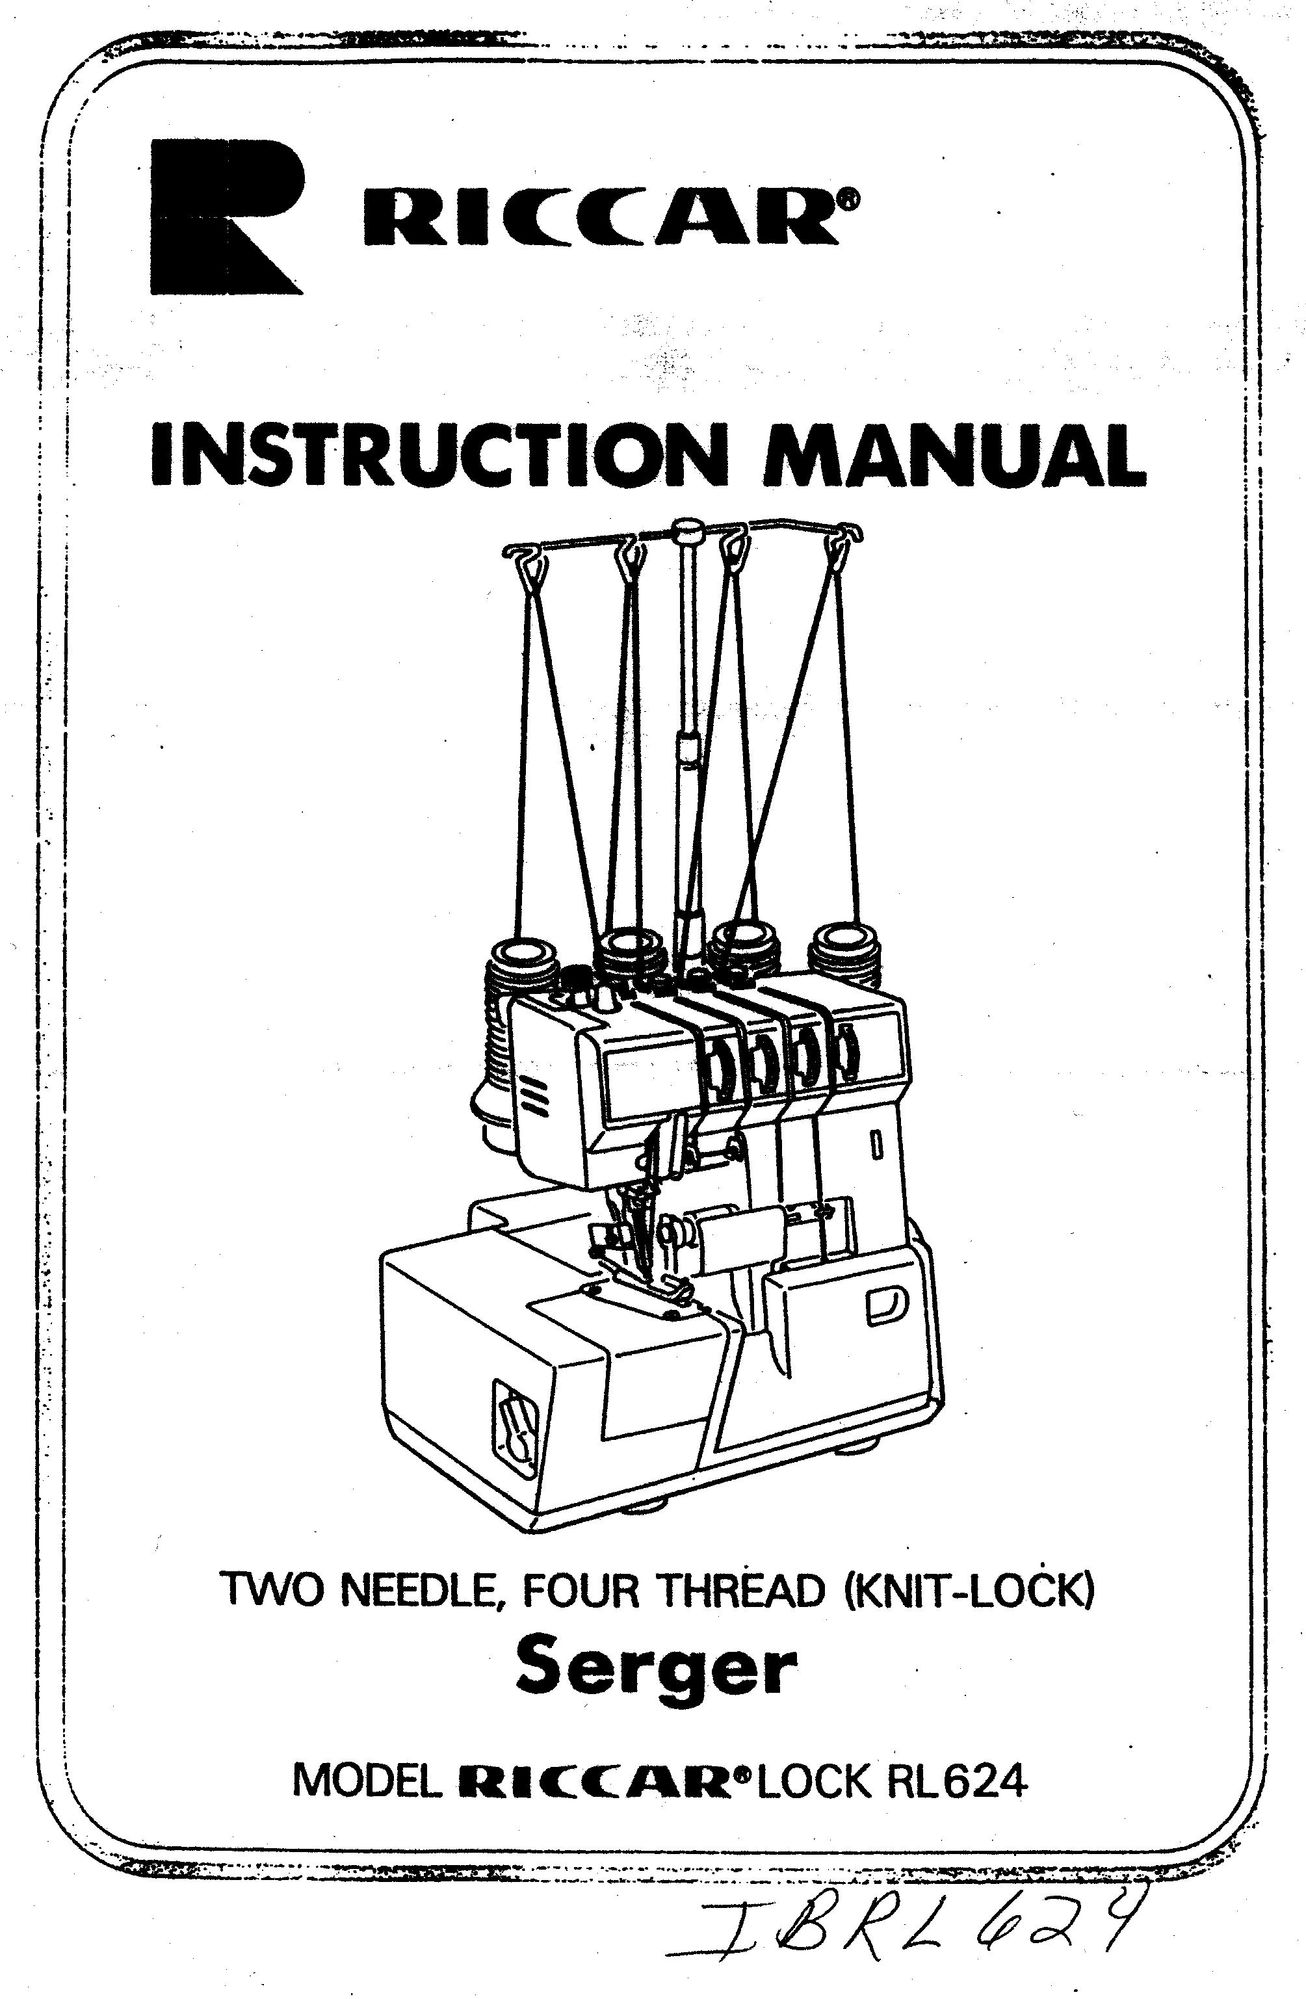 Riccar RL624 Sewing Machine User Manual